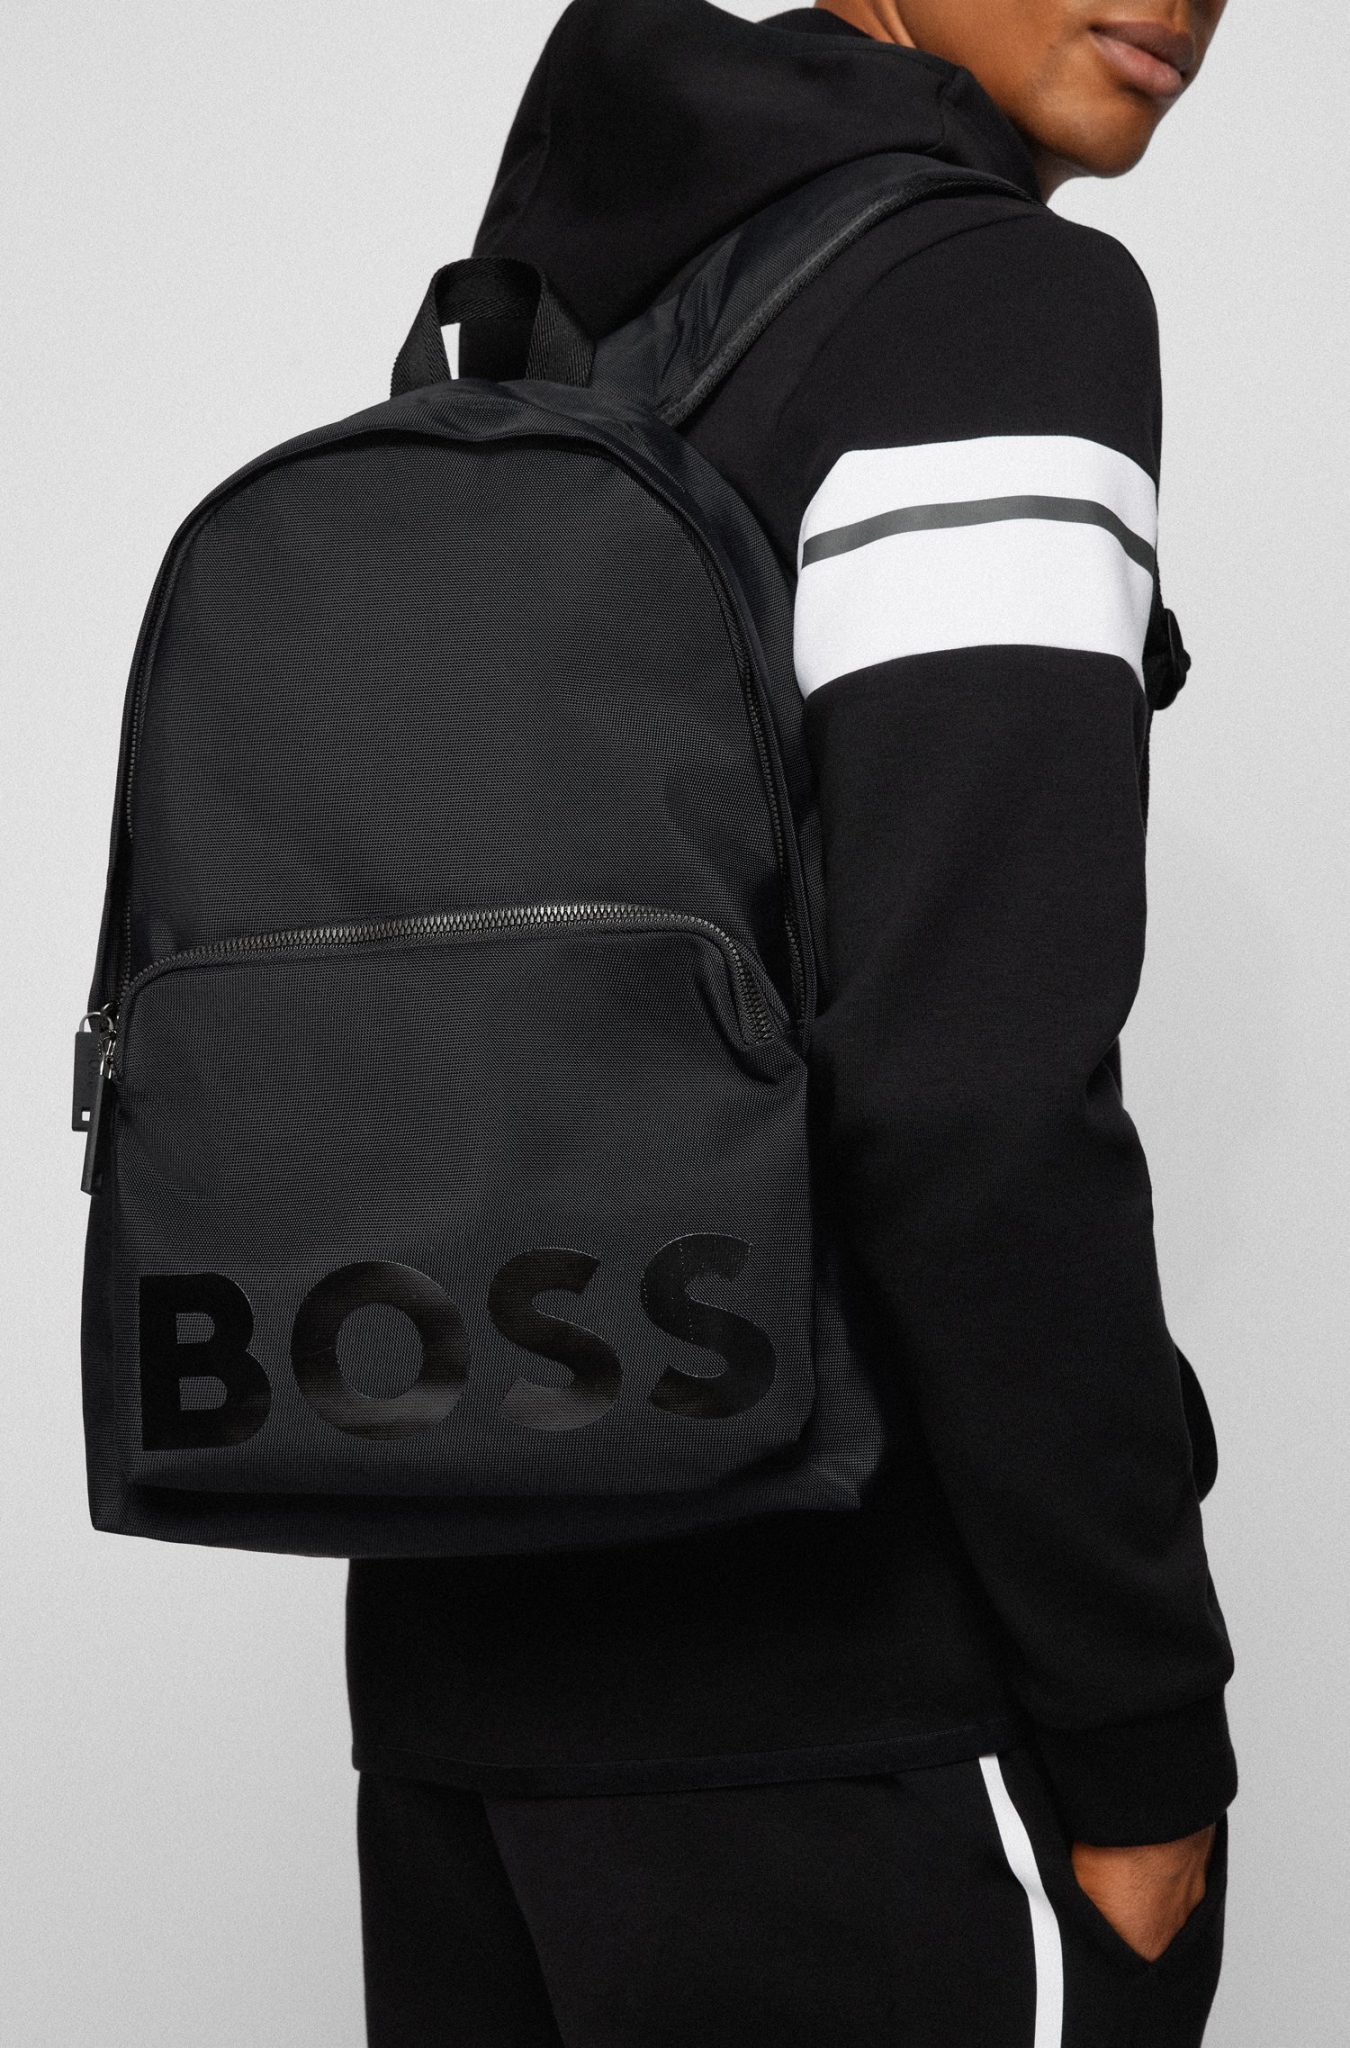 Big Boss Bag | Pink – Curated Curiosities